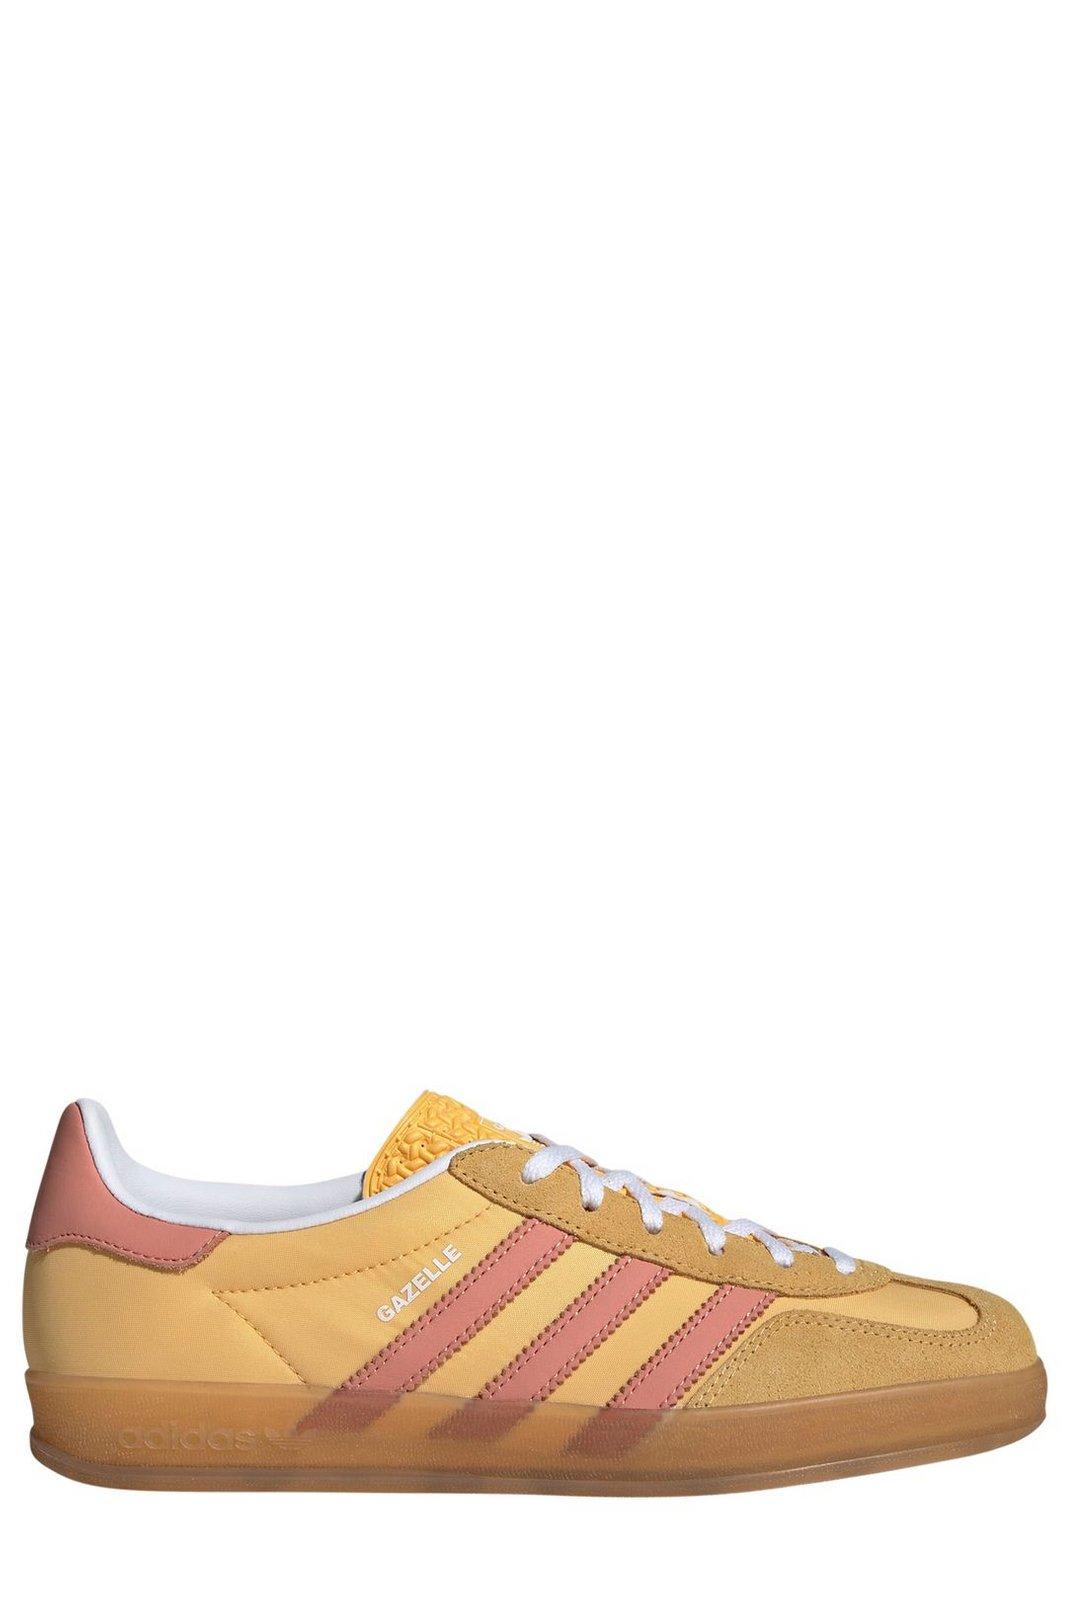 Shop Adidas Originals Gazelle Indoor Lace-up Sneakers In Yellow Pink